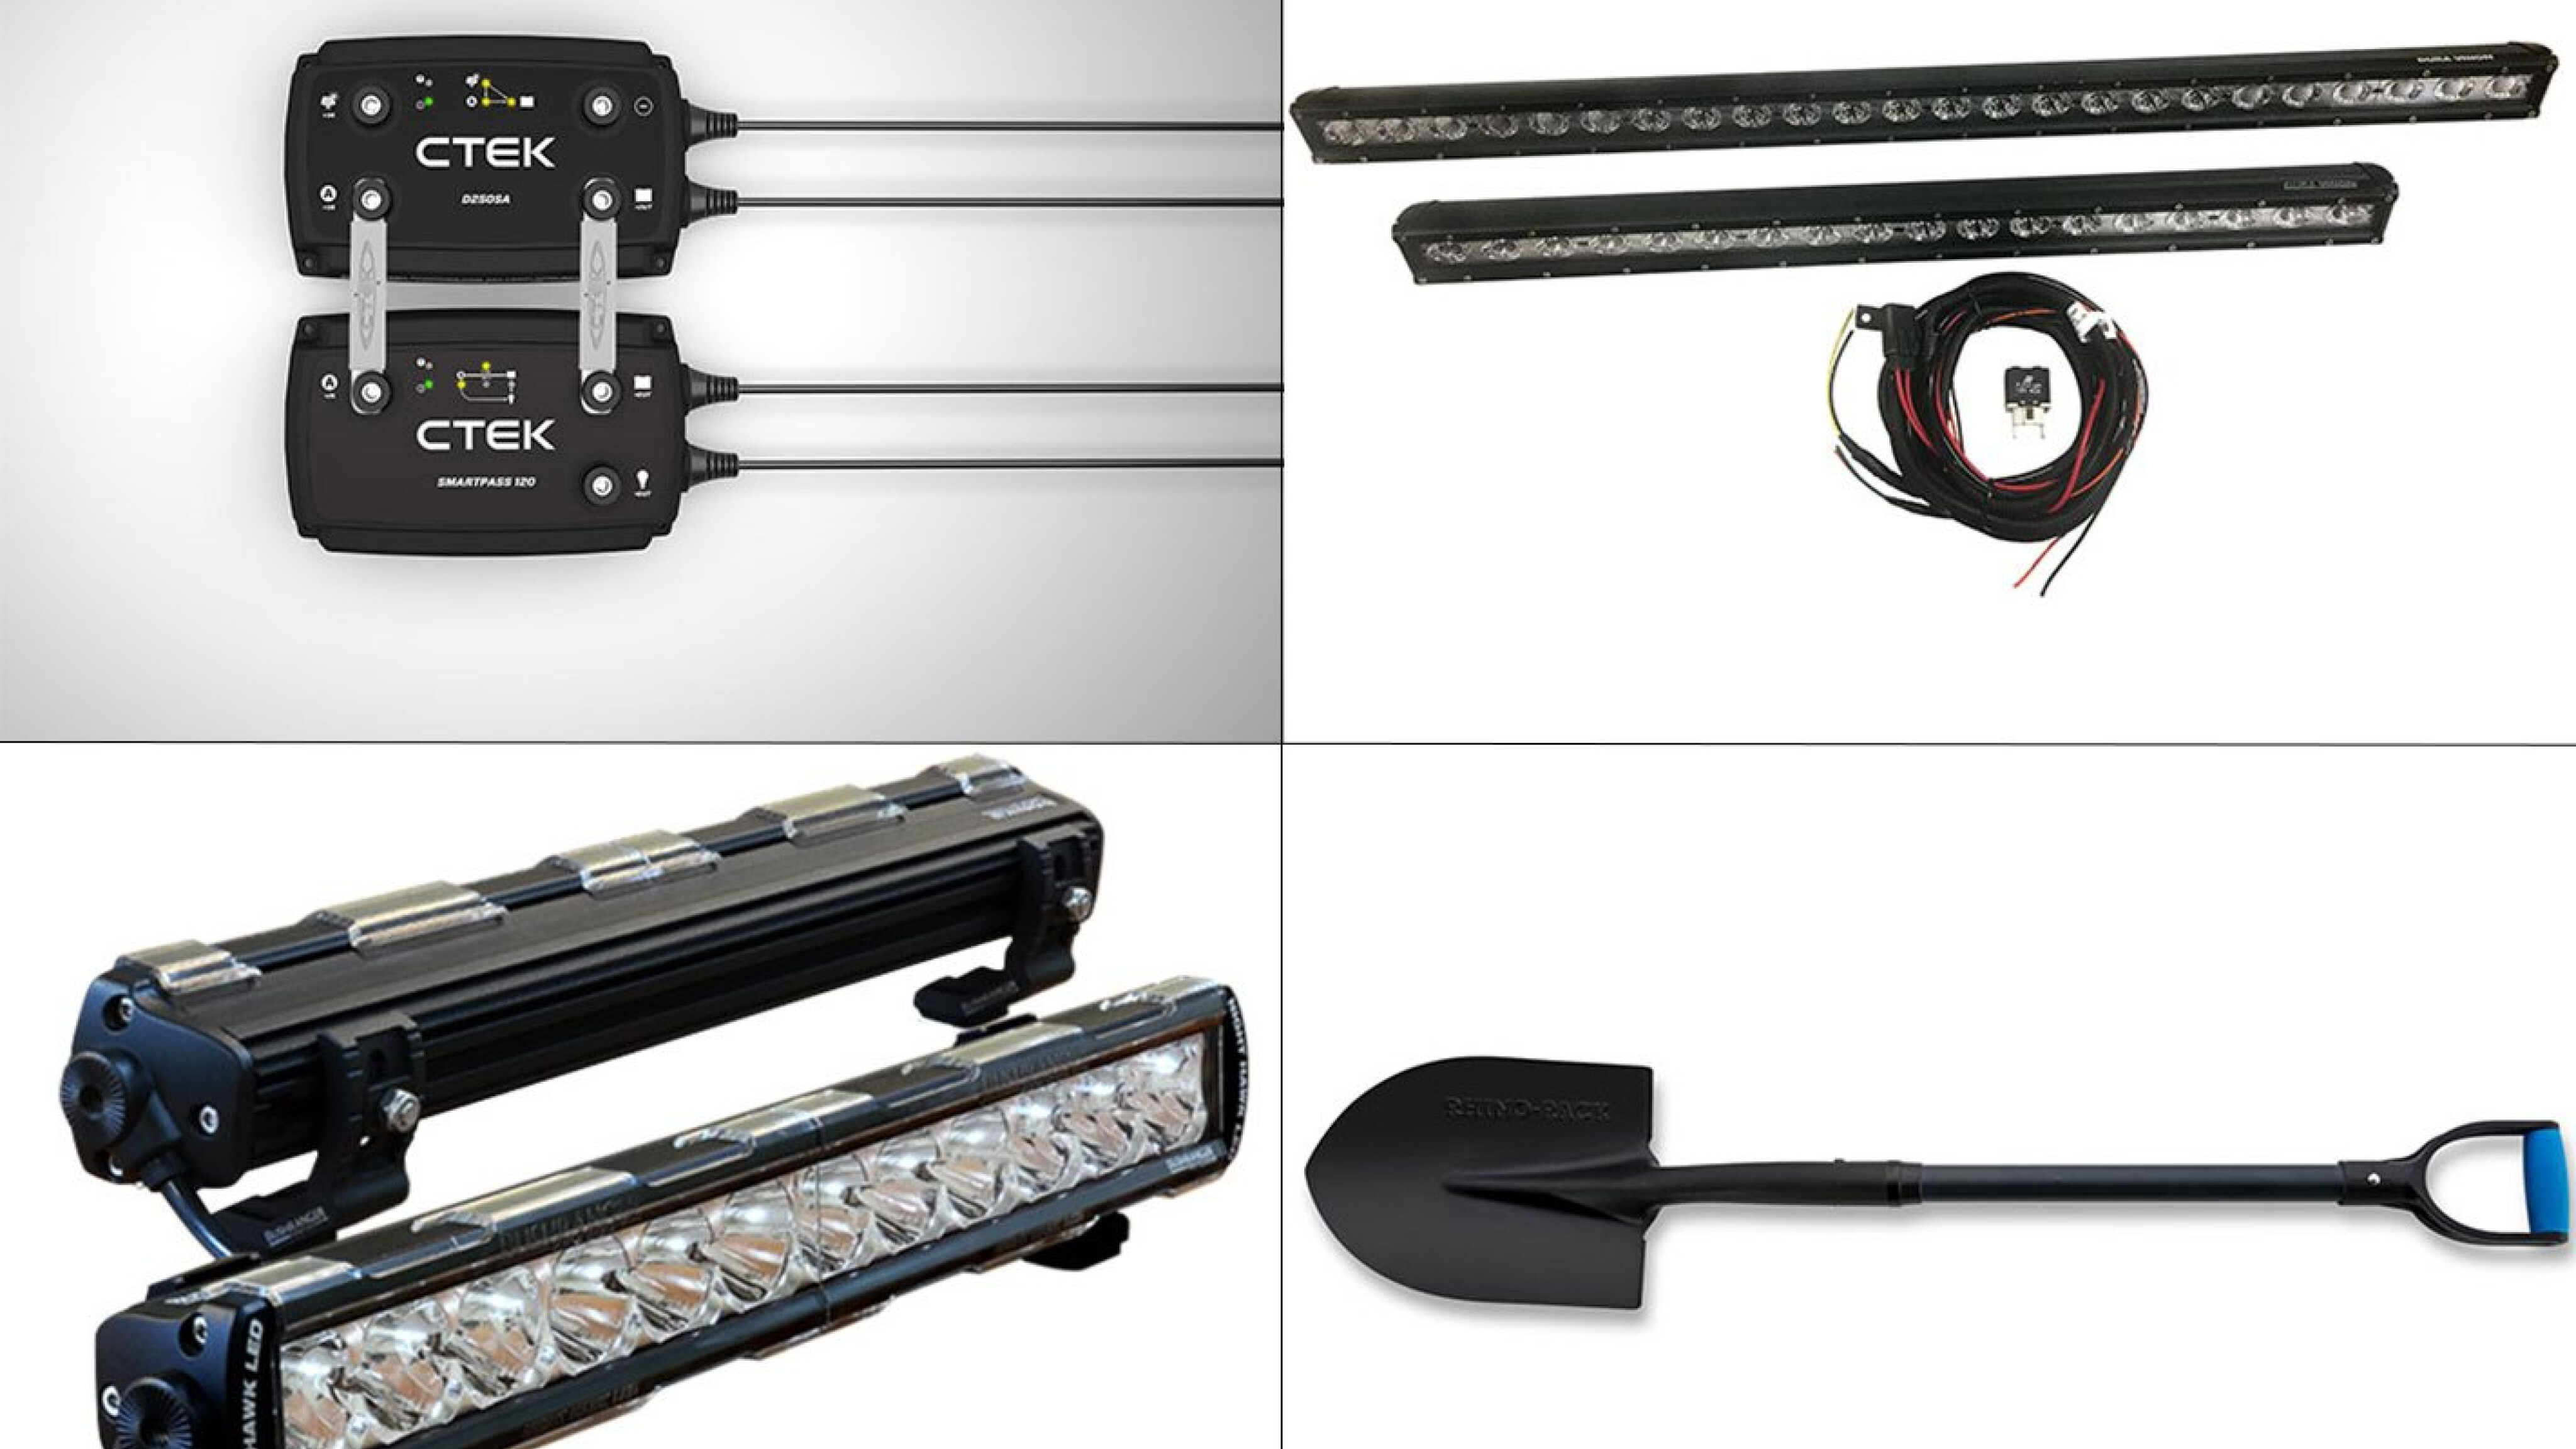 LED Light Bar  20.5 - Bushranger 4x4 Gear